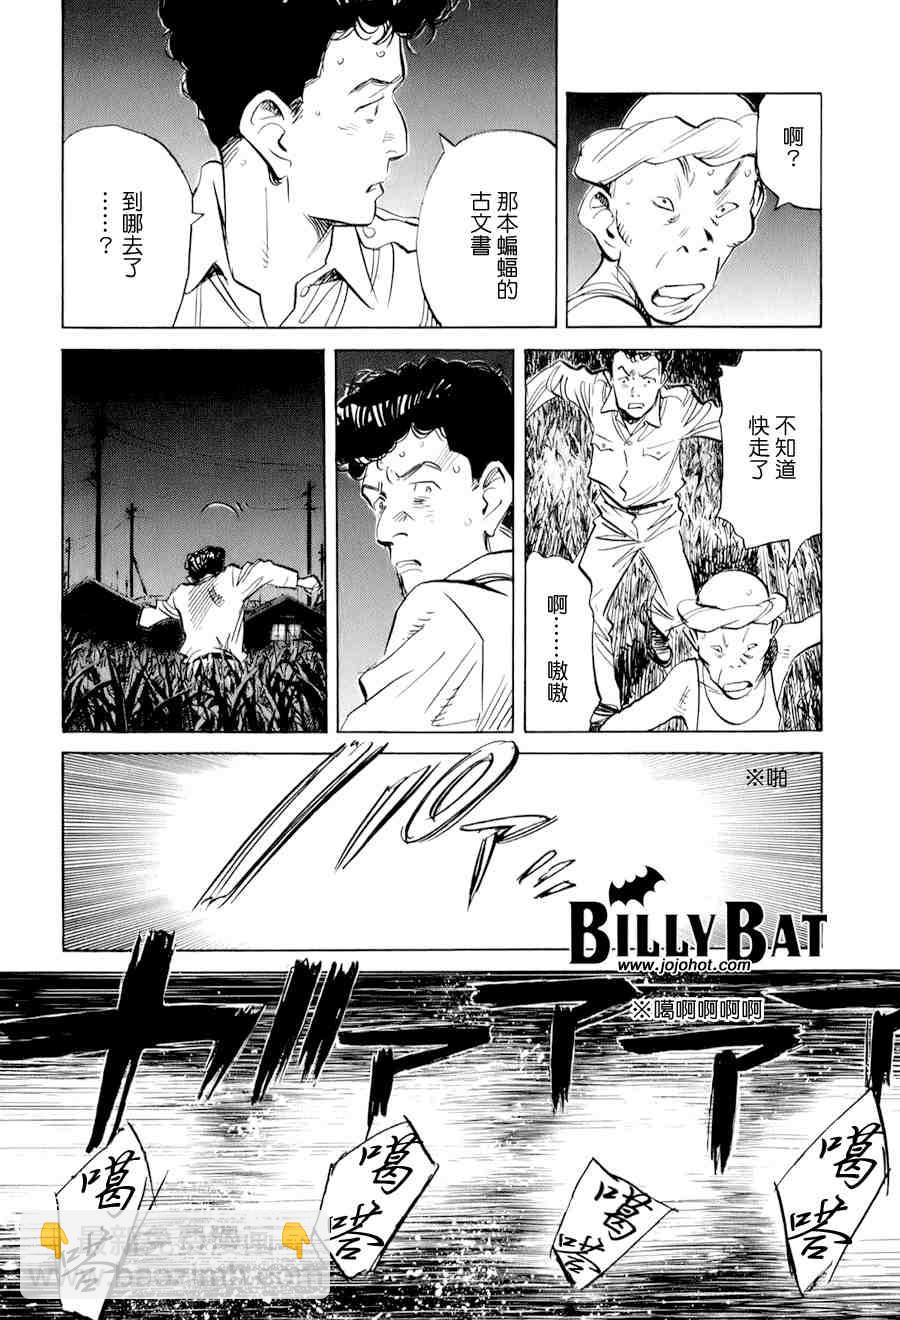 Billy_Bat - 第1卷(2/4) - 8